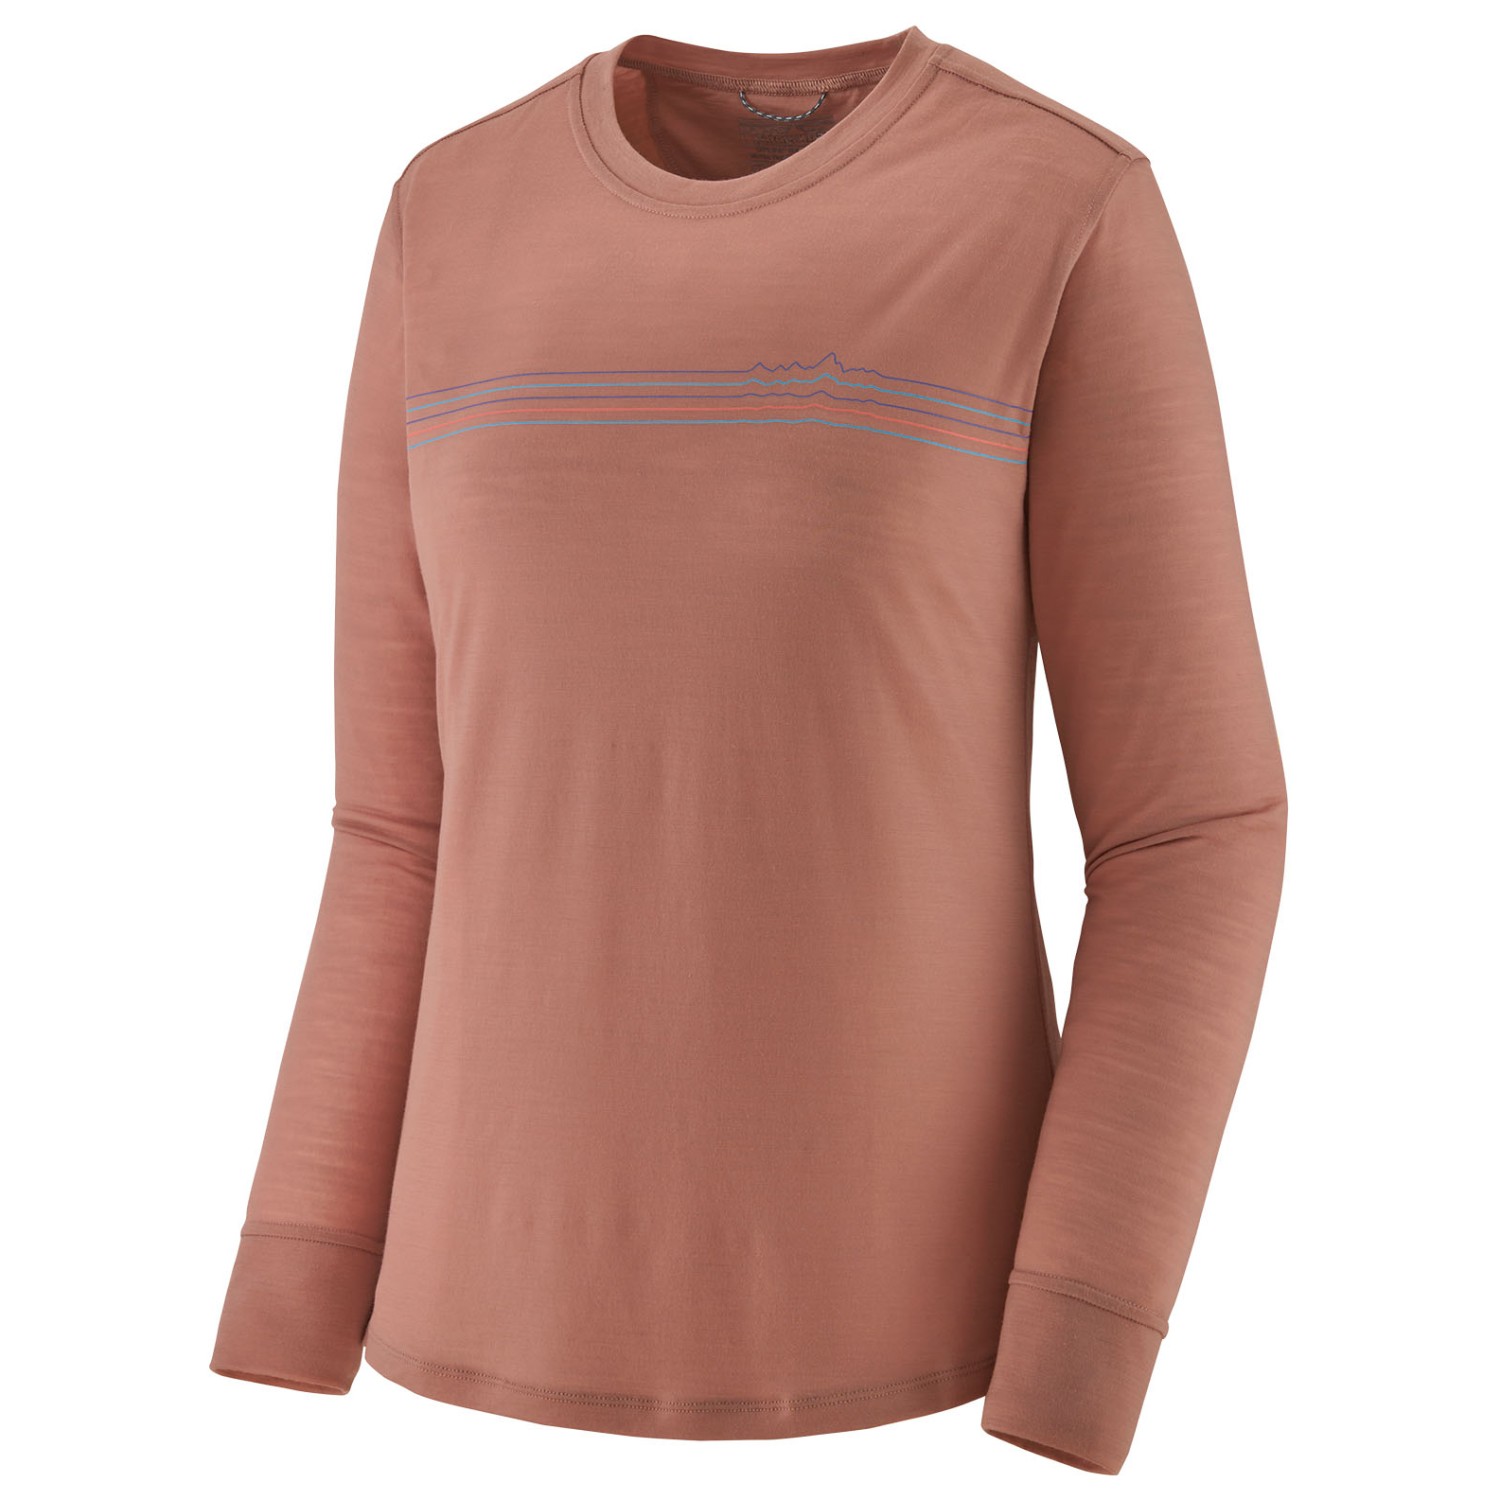 рубашка petite scotch plaid flannel tunic l l bean цвет rob roy Рубашка из мериноса Patagonia Women's L/S Cap Cool Merino Graphic Shirt, цвет Fitz Roy Fader/Terra Pink